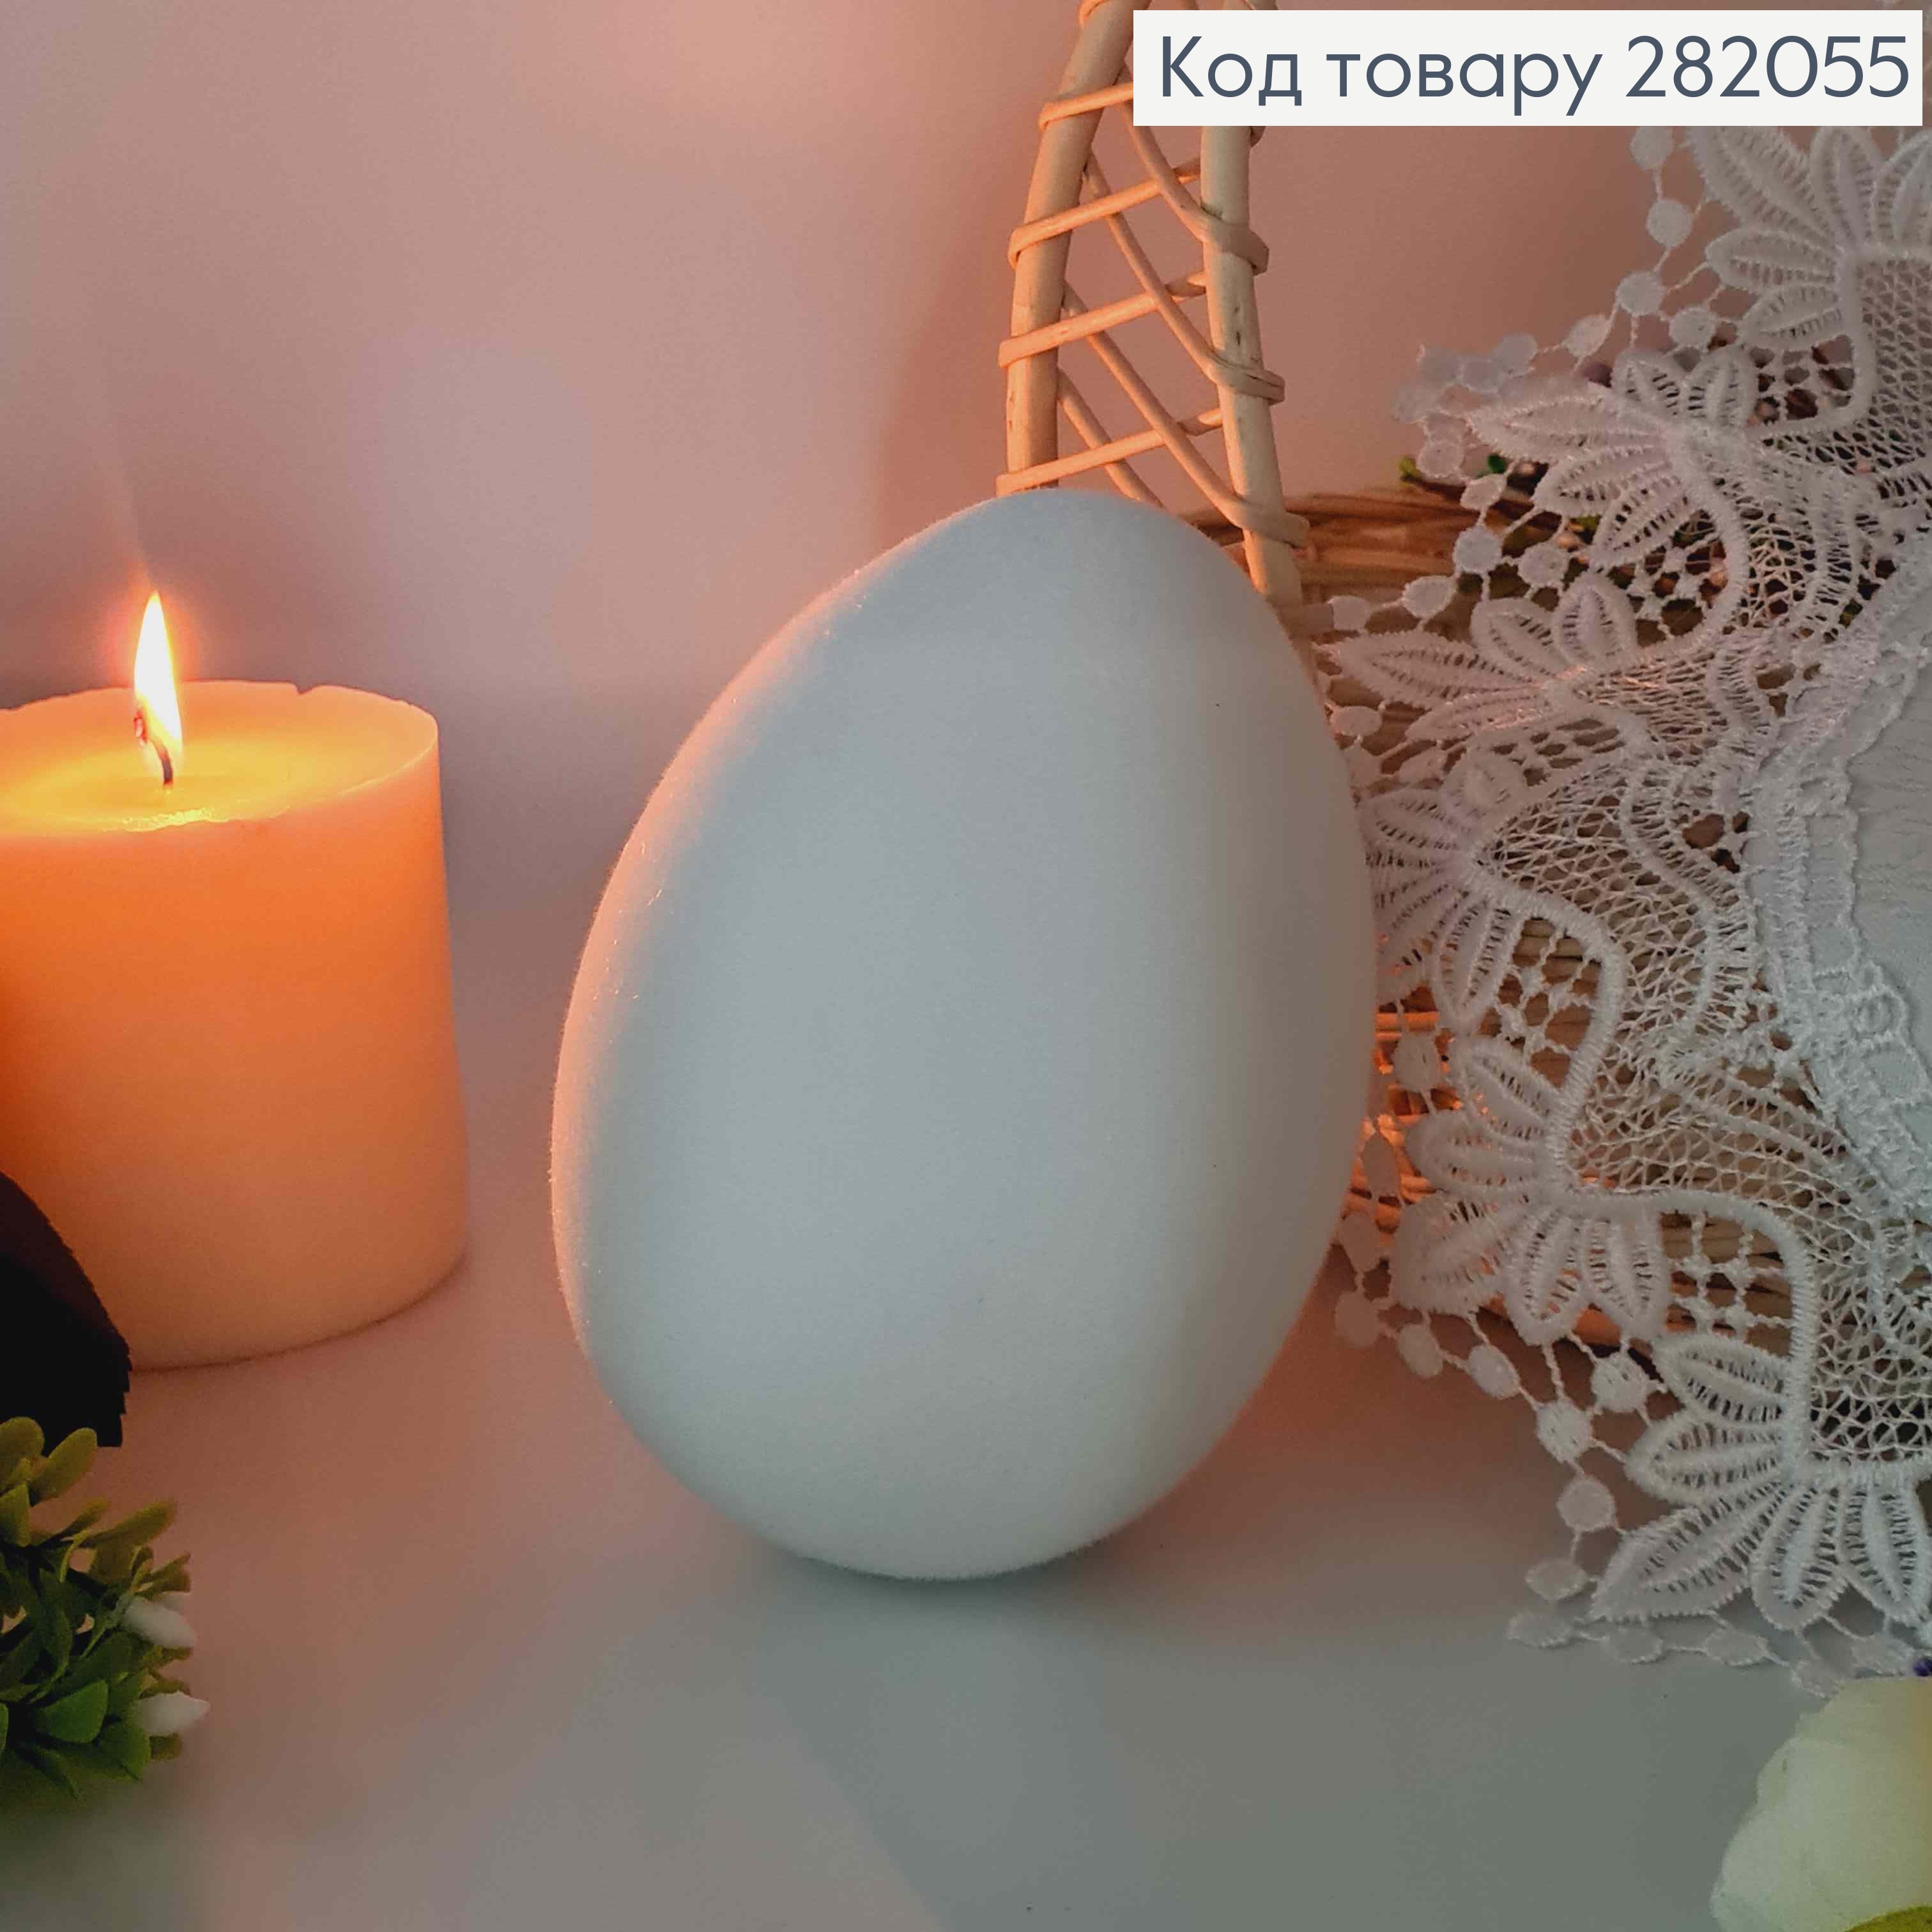 Яйце страусине, Бархат, БІЛОГО кольору, 15*10см 282055 фото 2